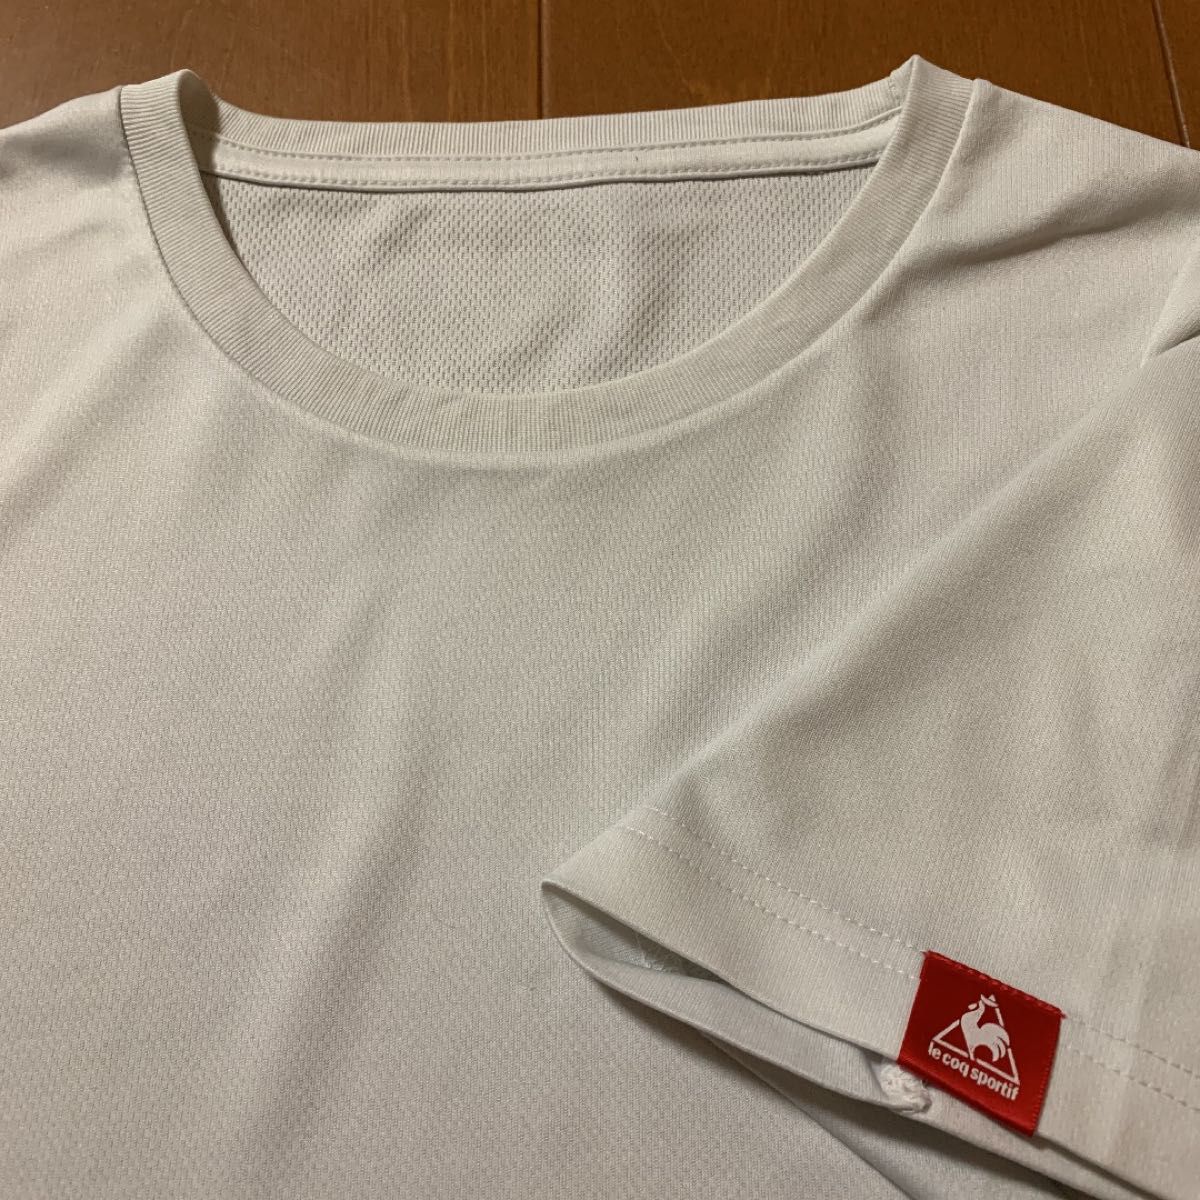 le coq sportif 正規品 Tシャツ メンズ Mサイズ 白 ホワイト